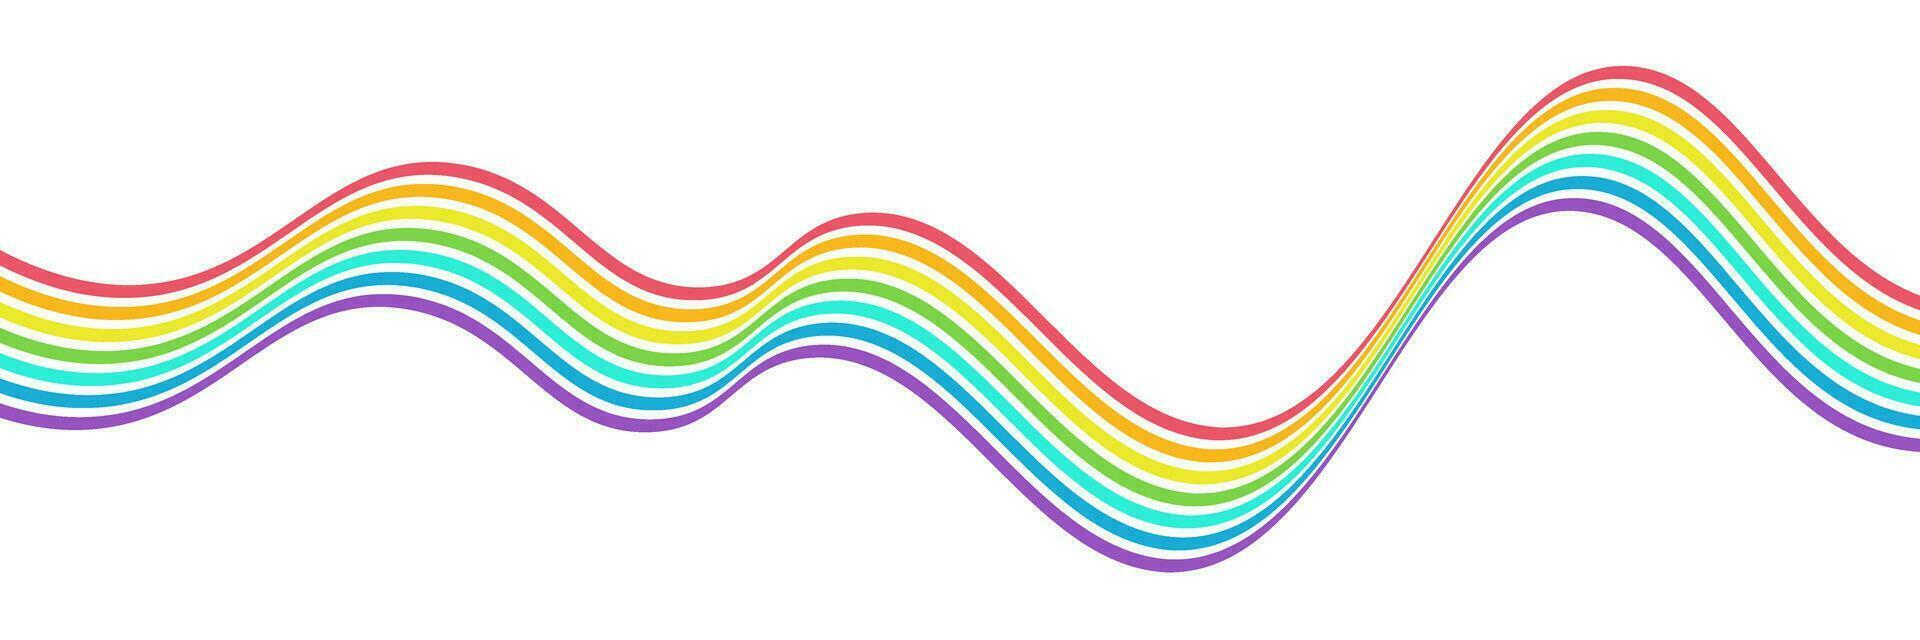 arco iris ondulado color líneas ilustración vector